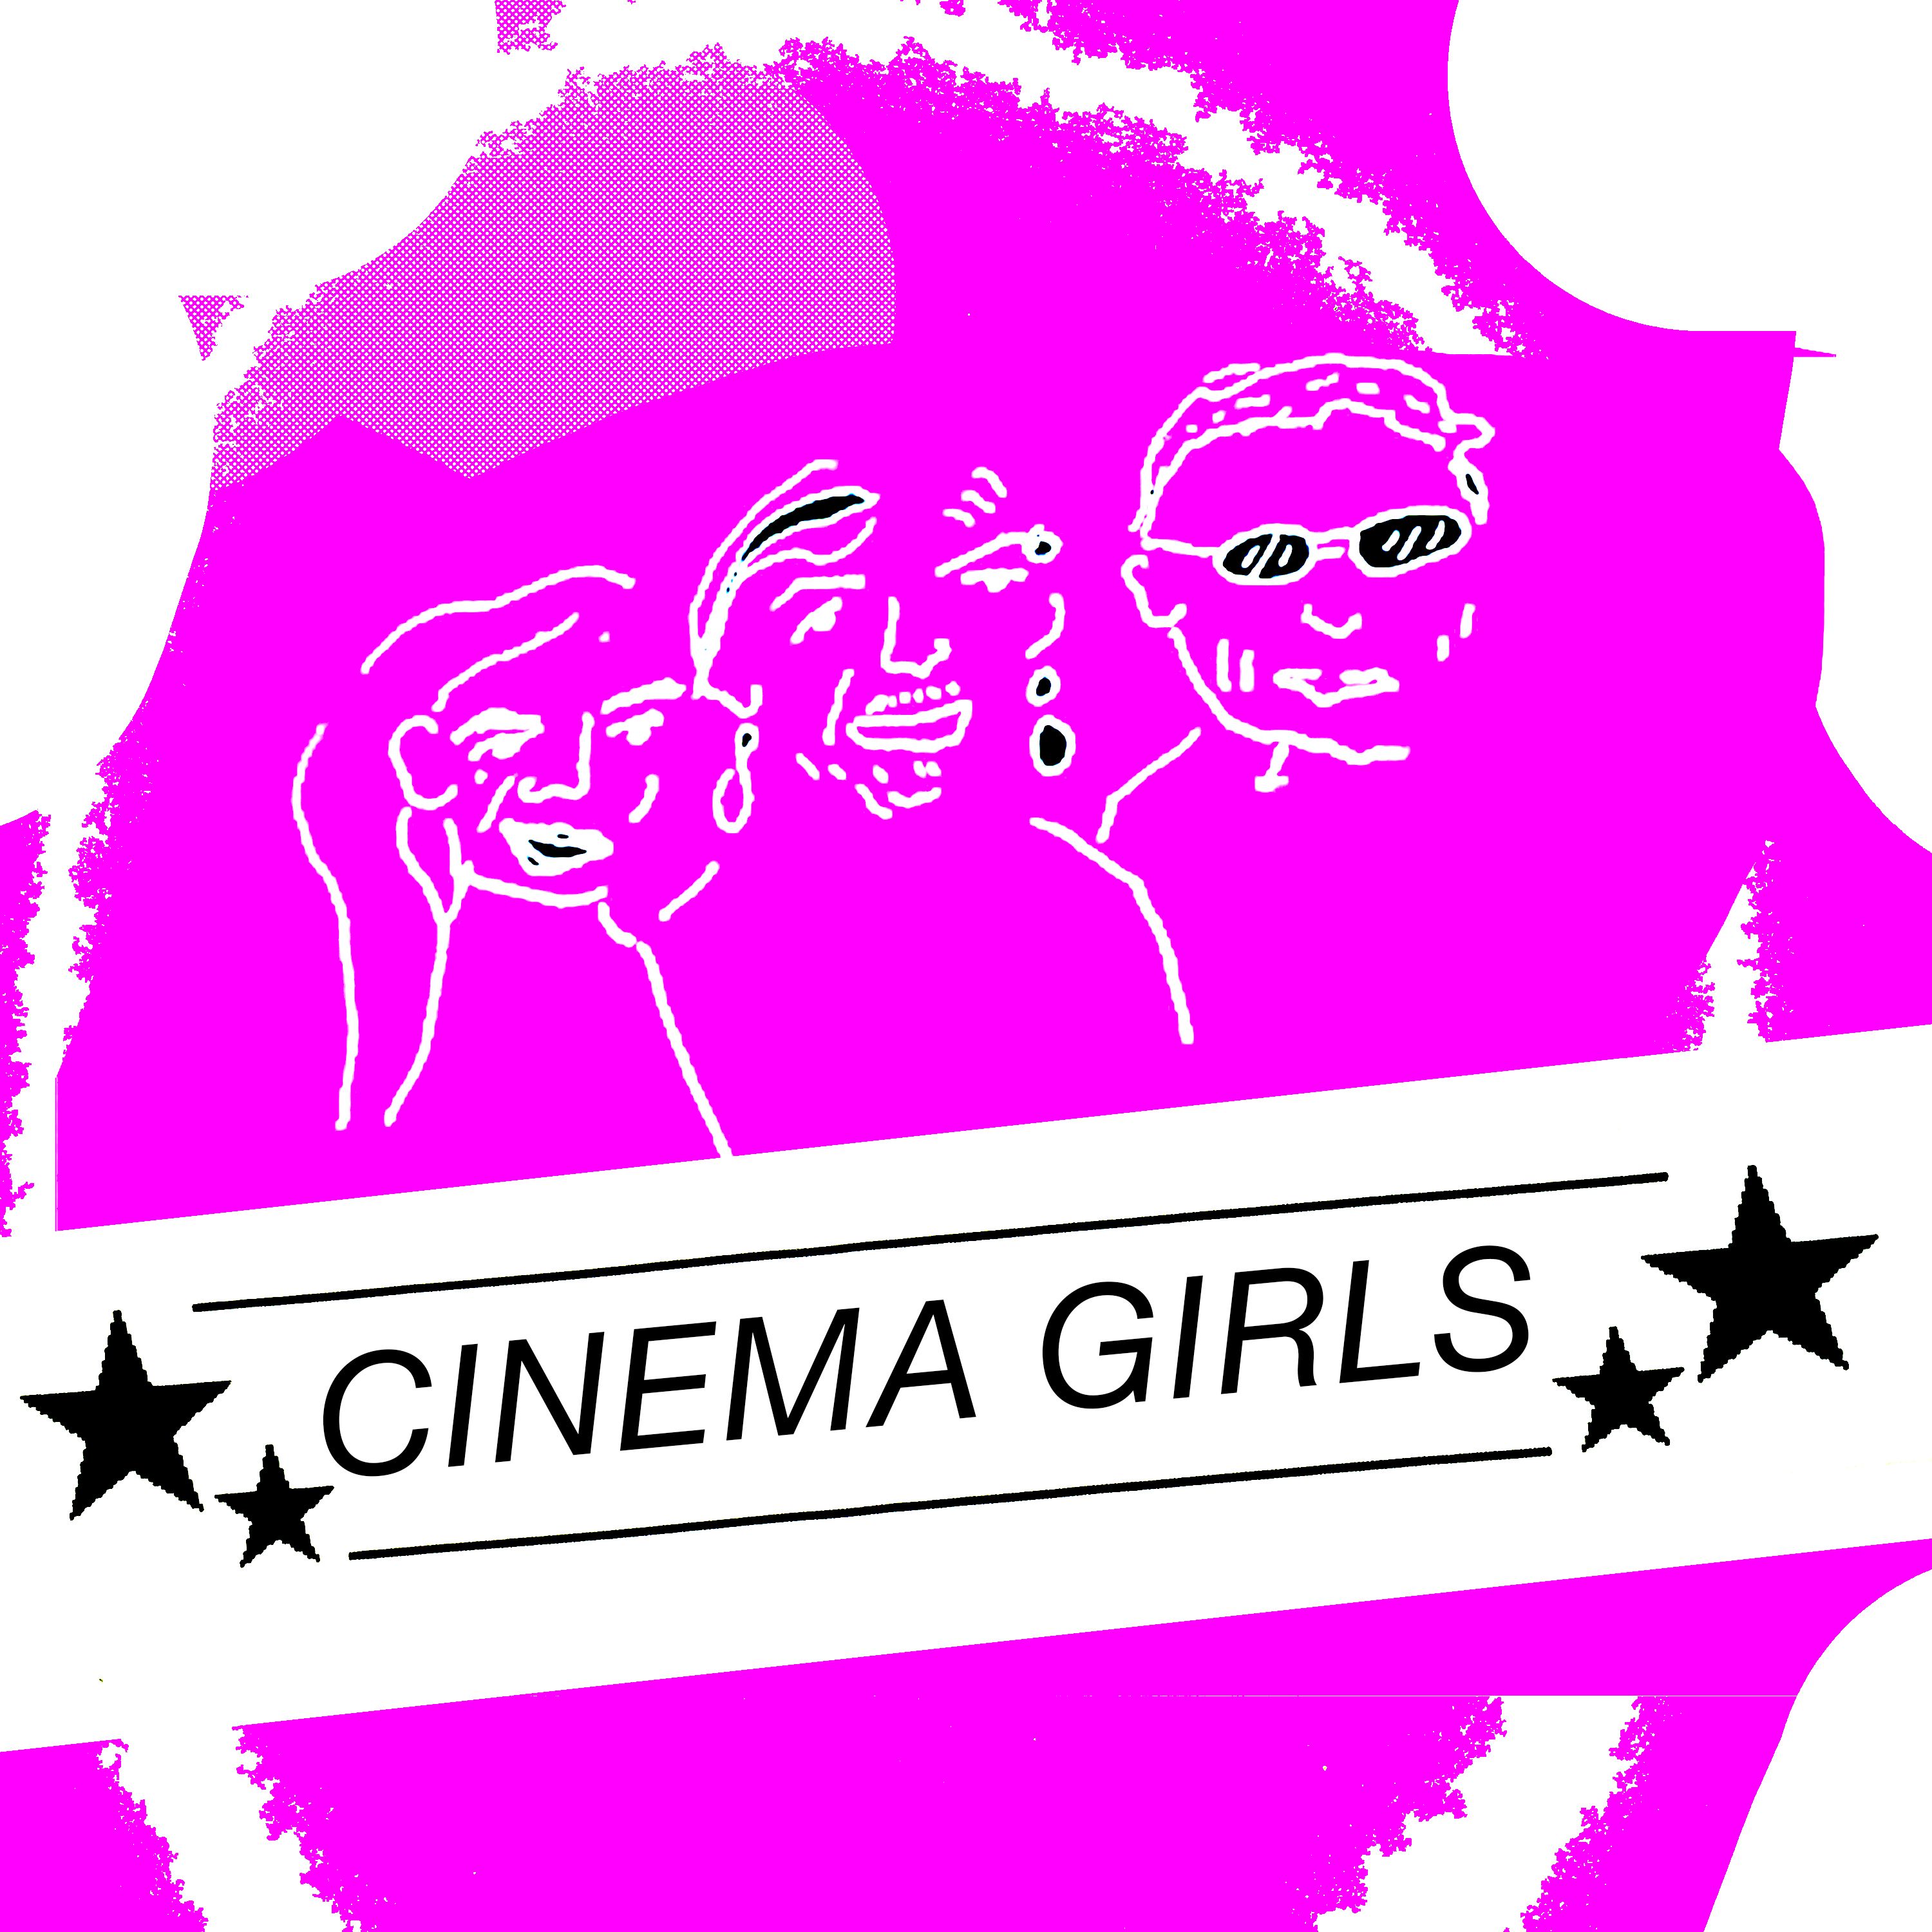 Cinema Girls